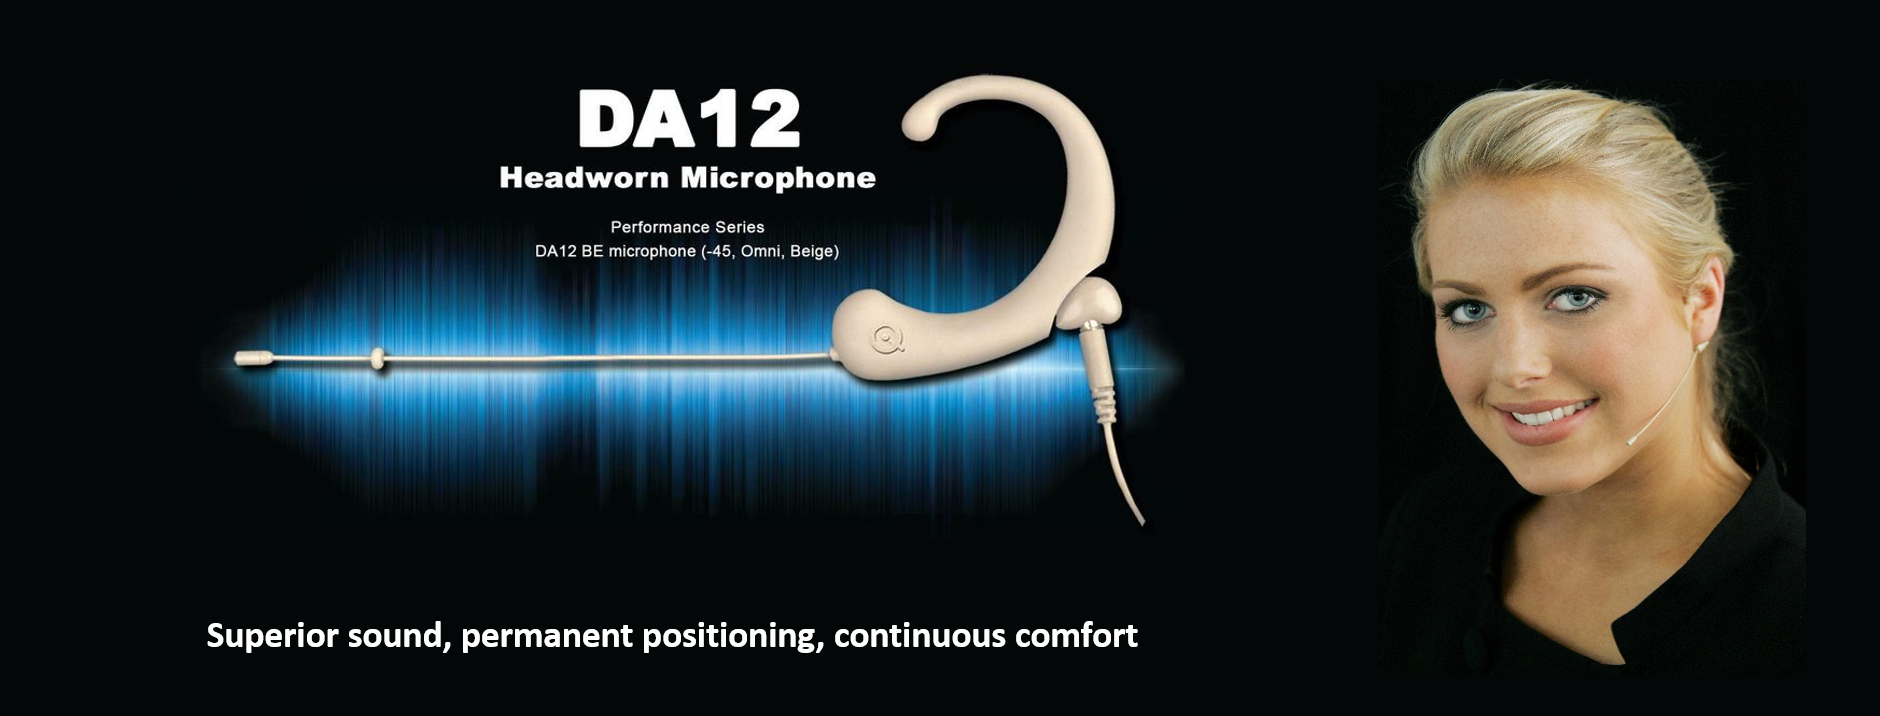 DA12 Headworn Microphone promotion image